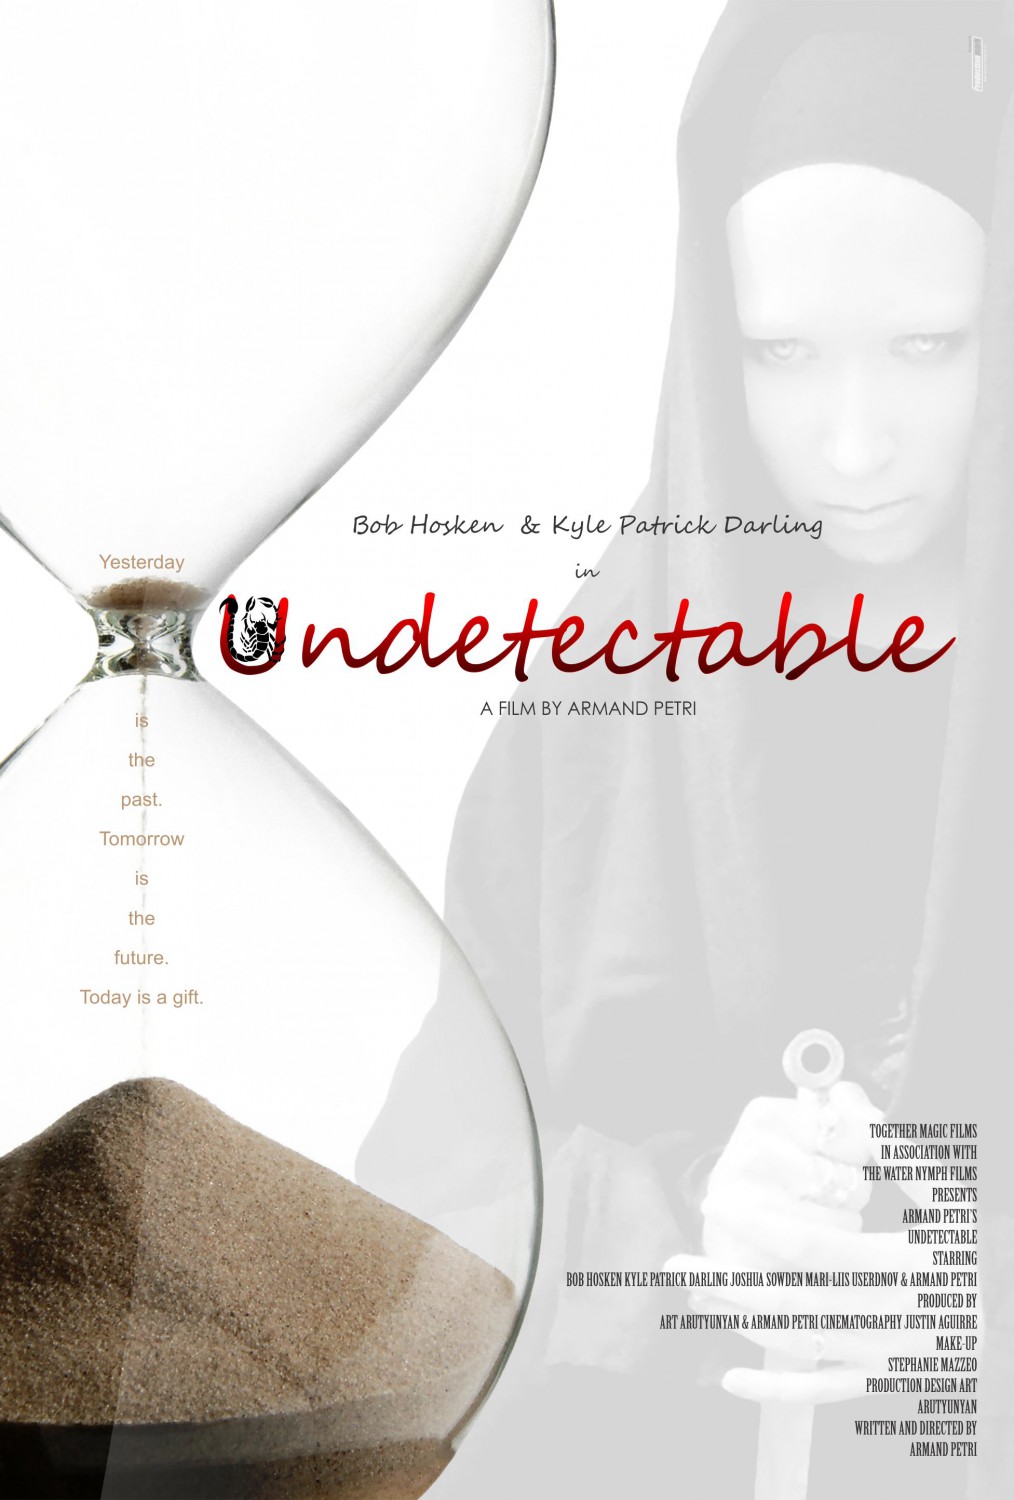 Productionmark-Services-Film-Poster-Design-Short-Film-Undetectable